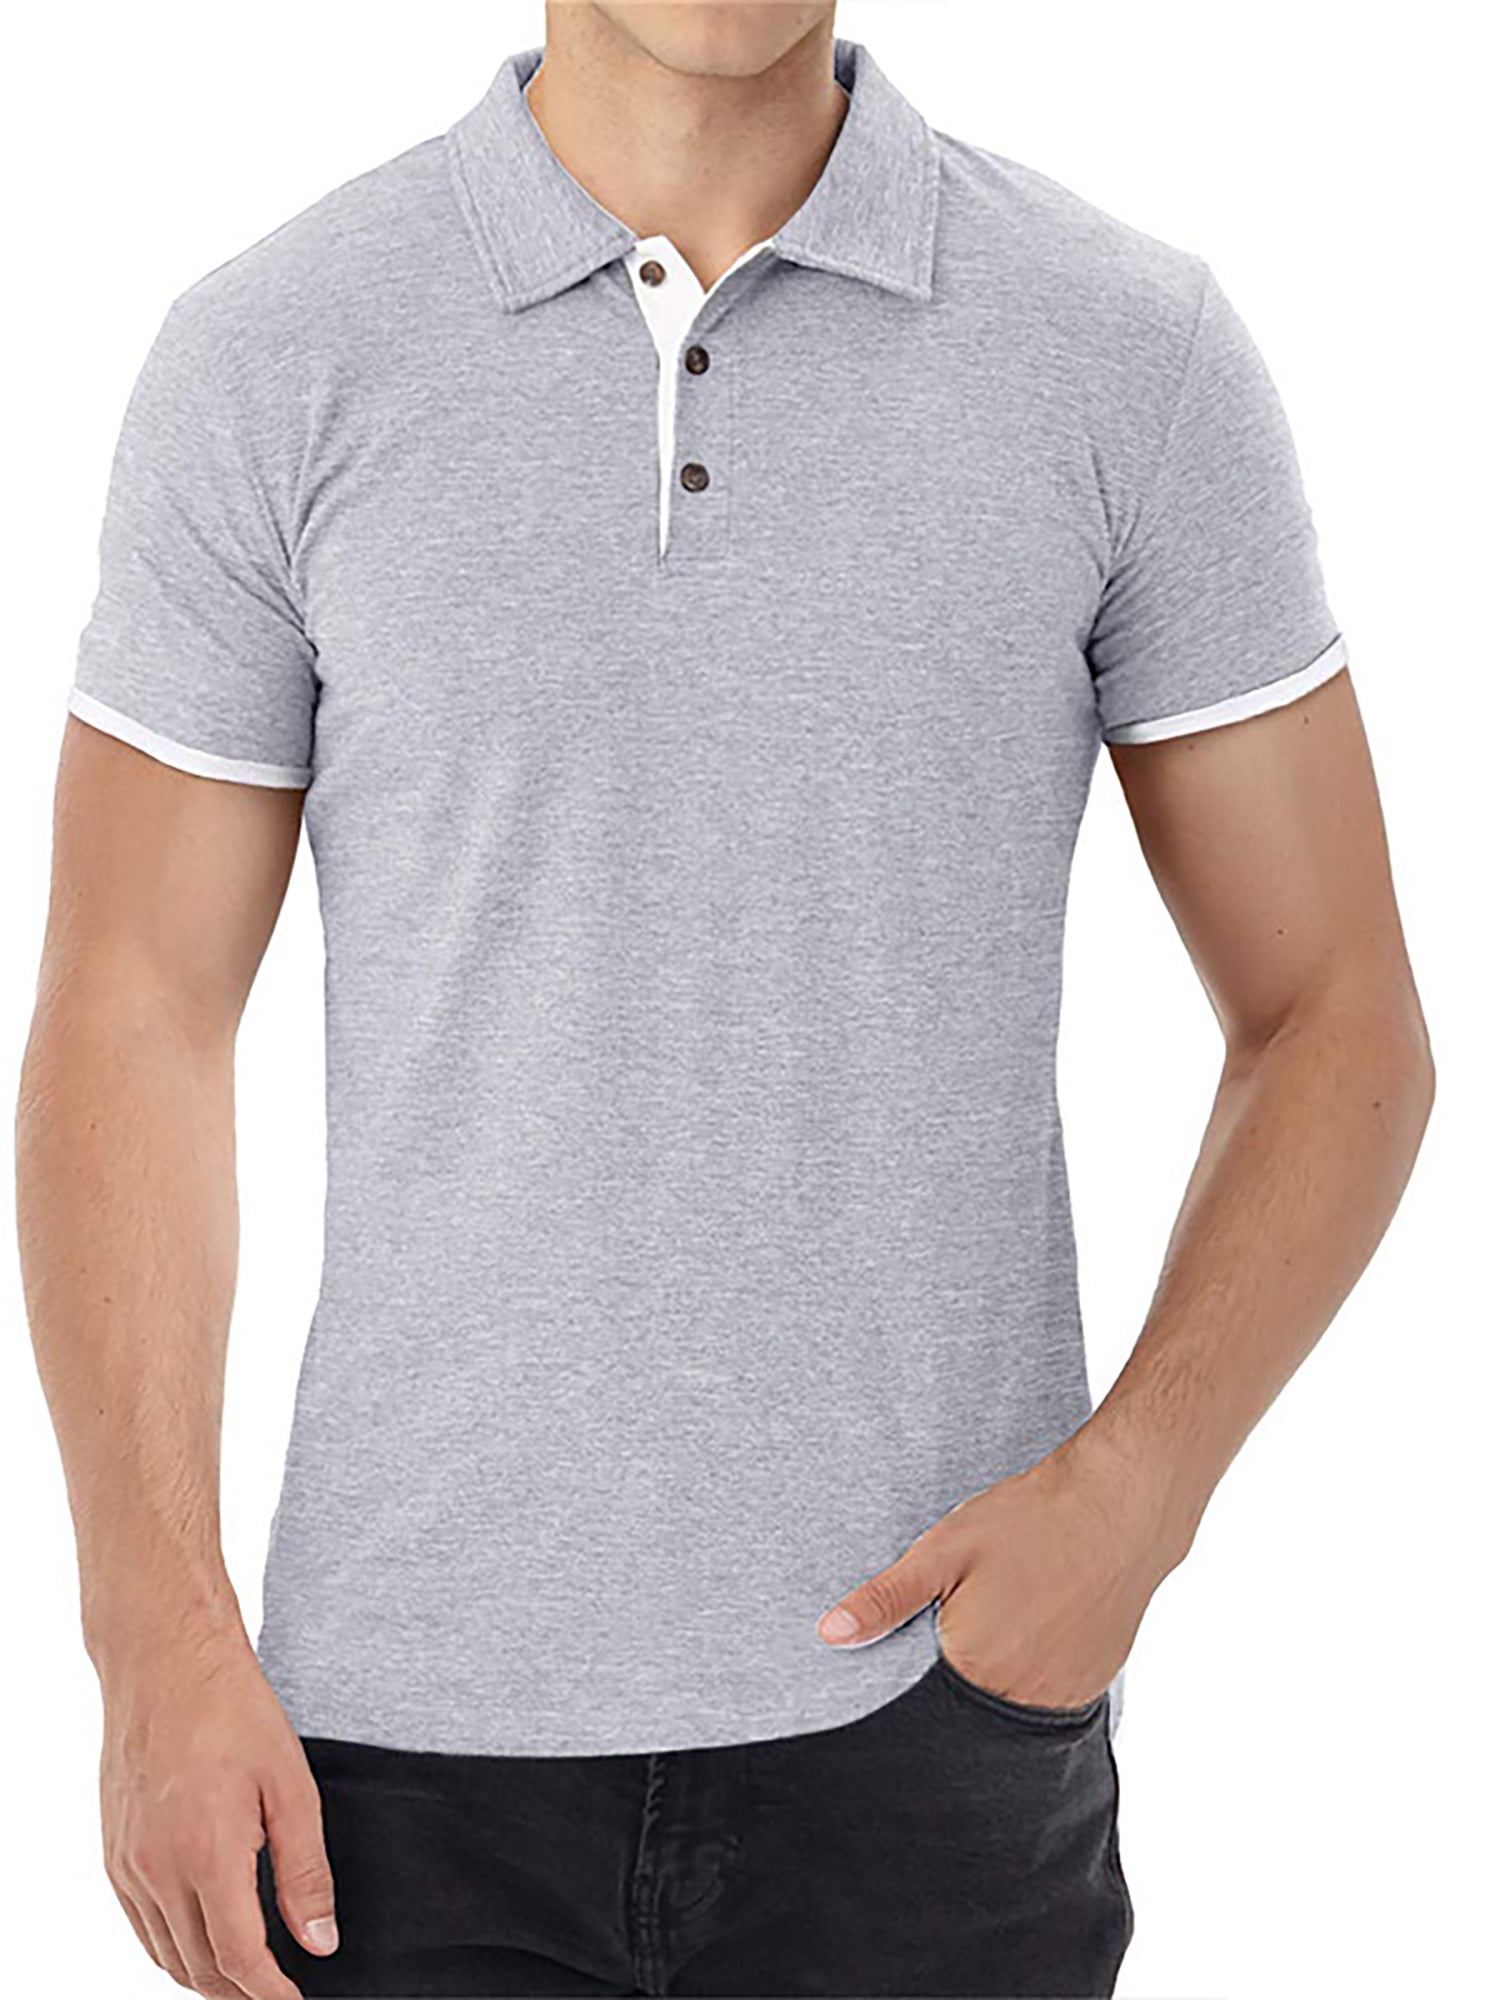 Regular Fit Plain Short Sleeve Textured Jersey with Collar Lovert Premium Organic Cotton Polo Shirts for Men 